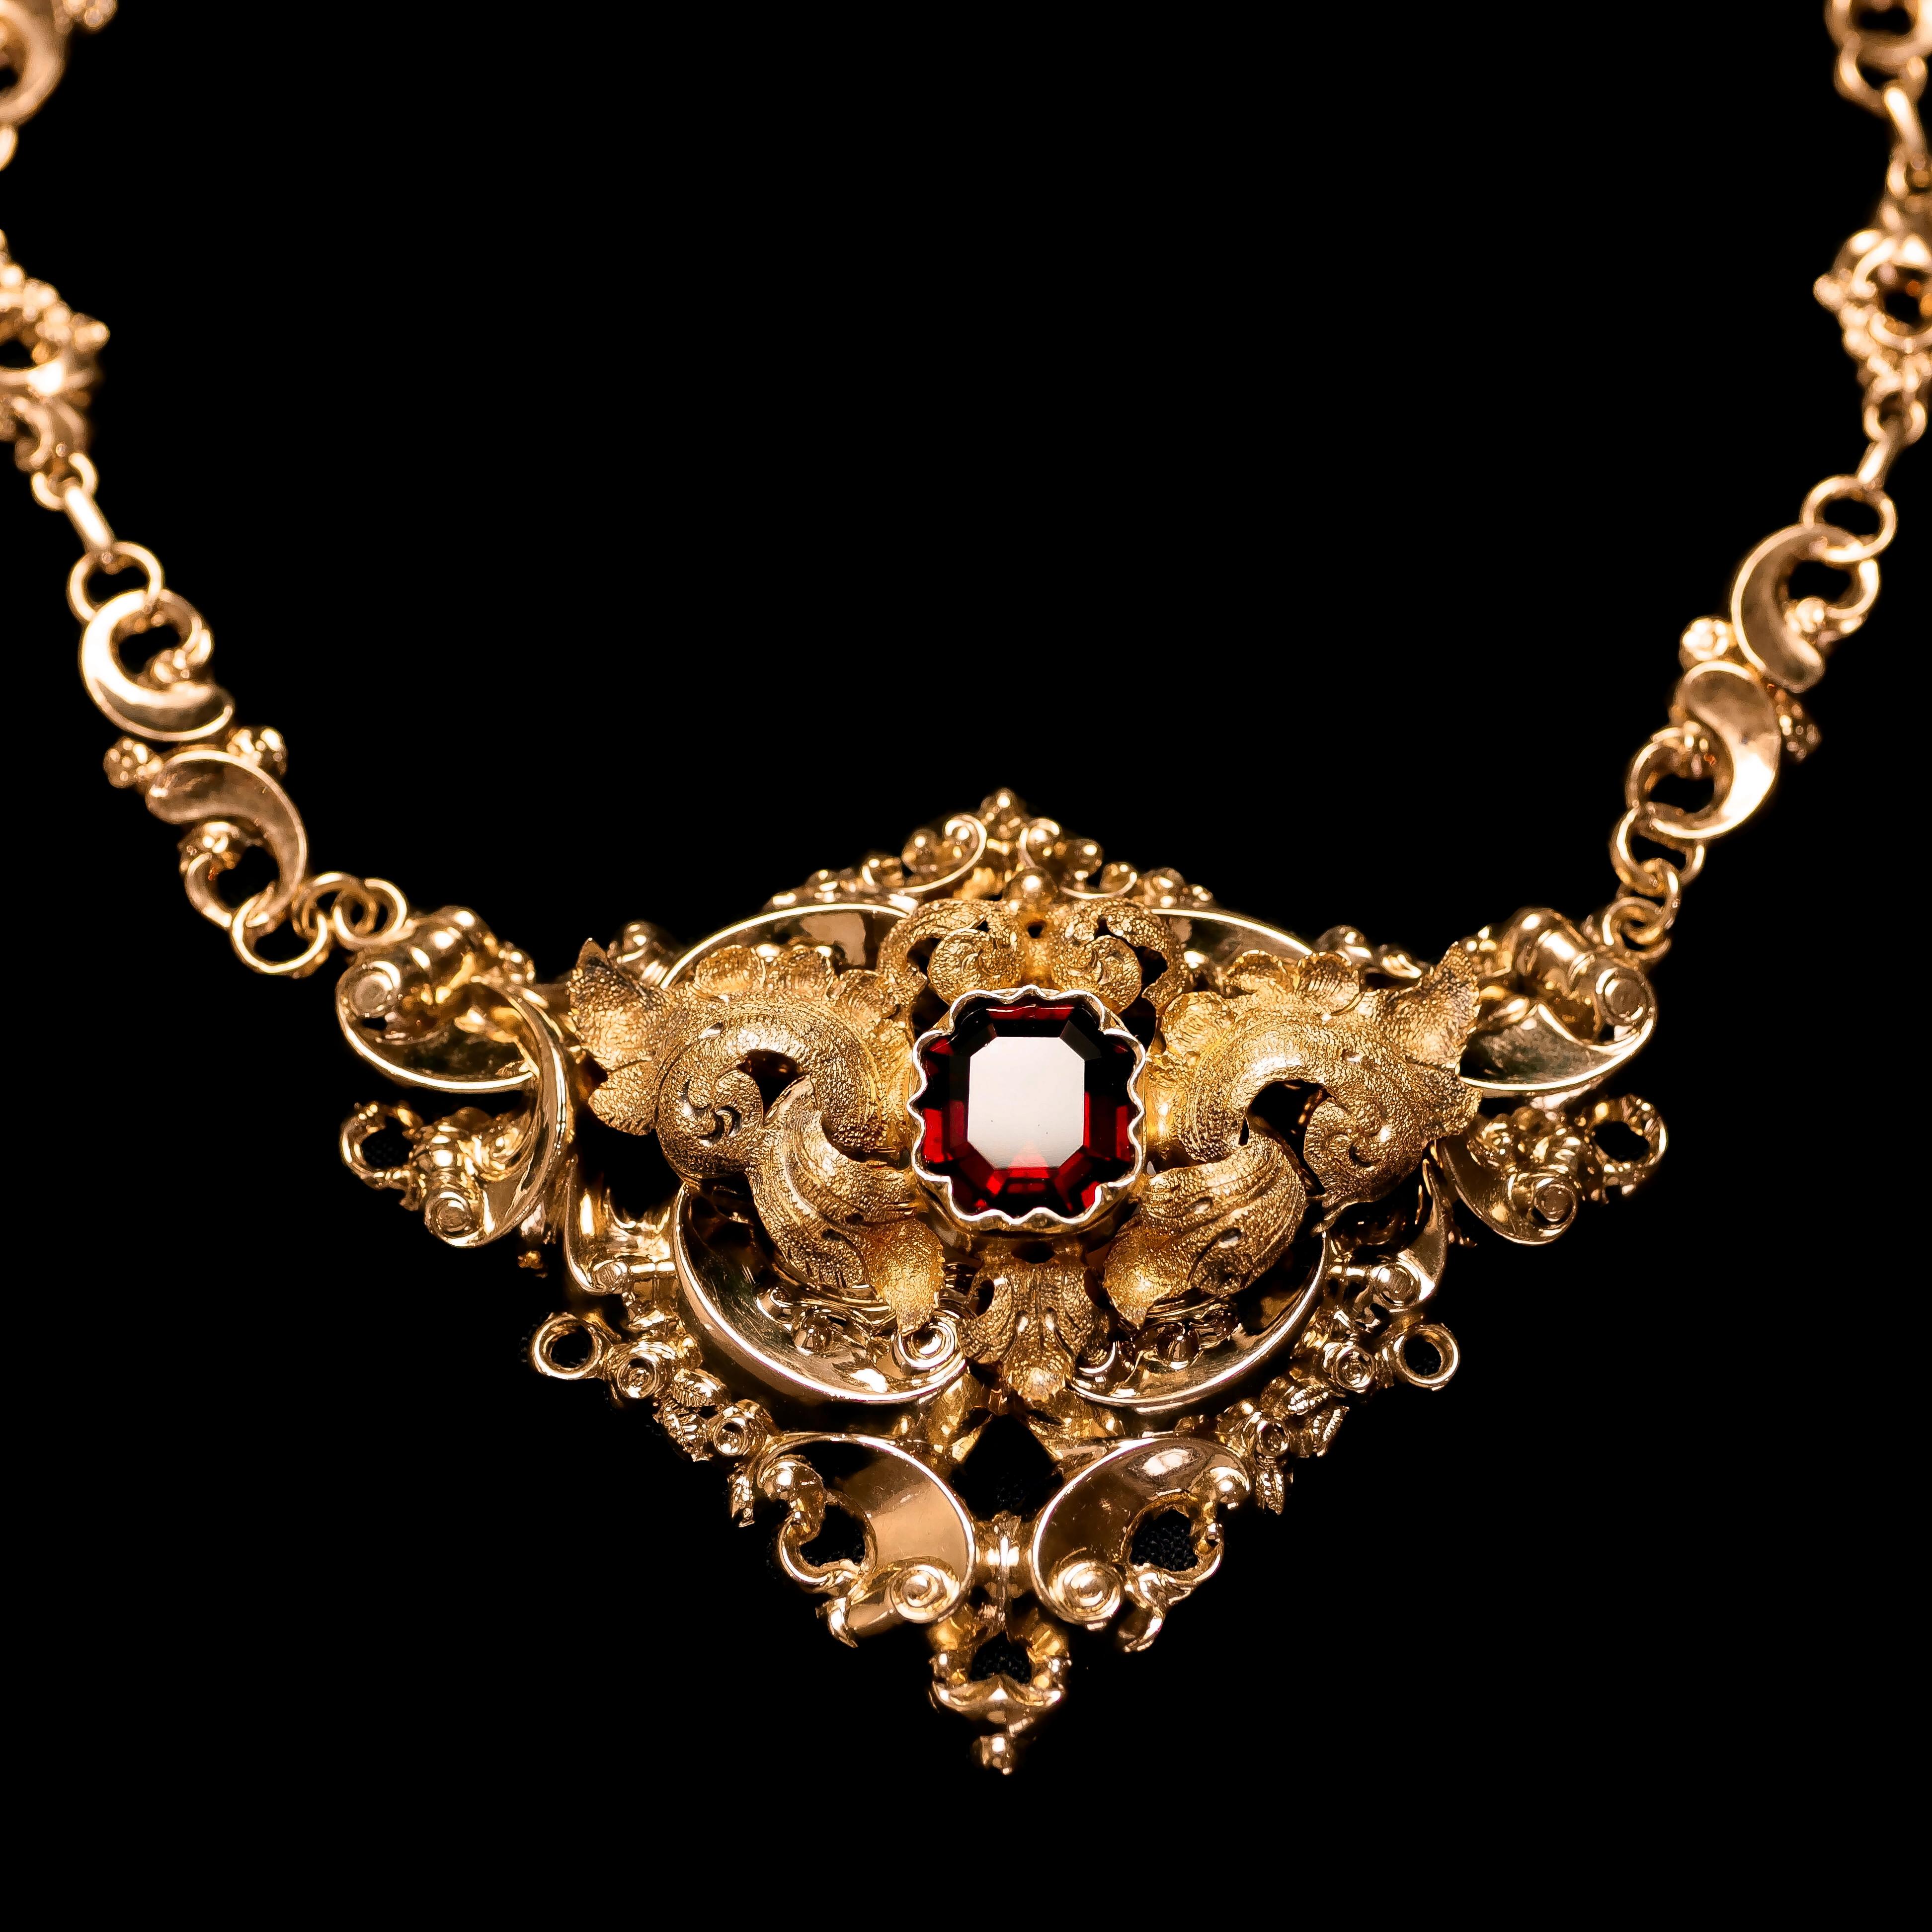 Antique Victorian 18K Gold Garnet Necklace in Baroque Revival Style, c.1840 3